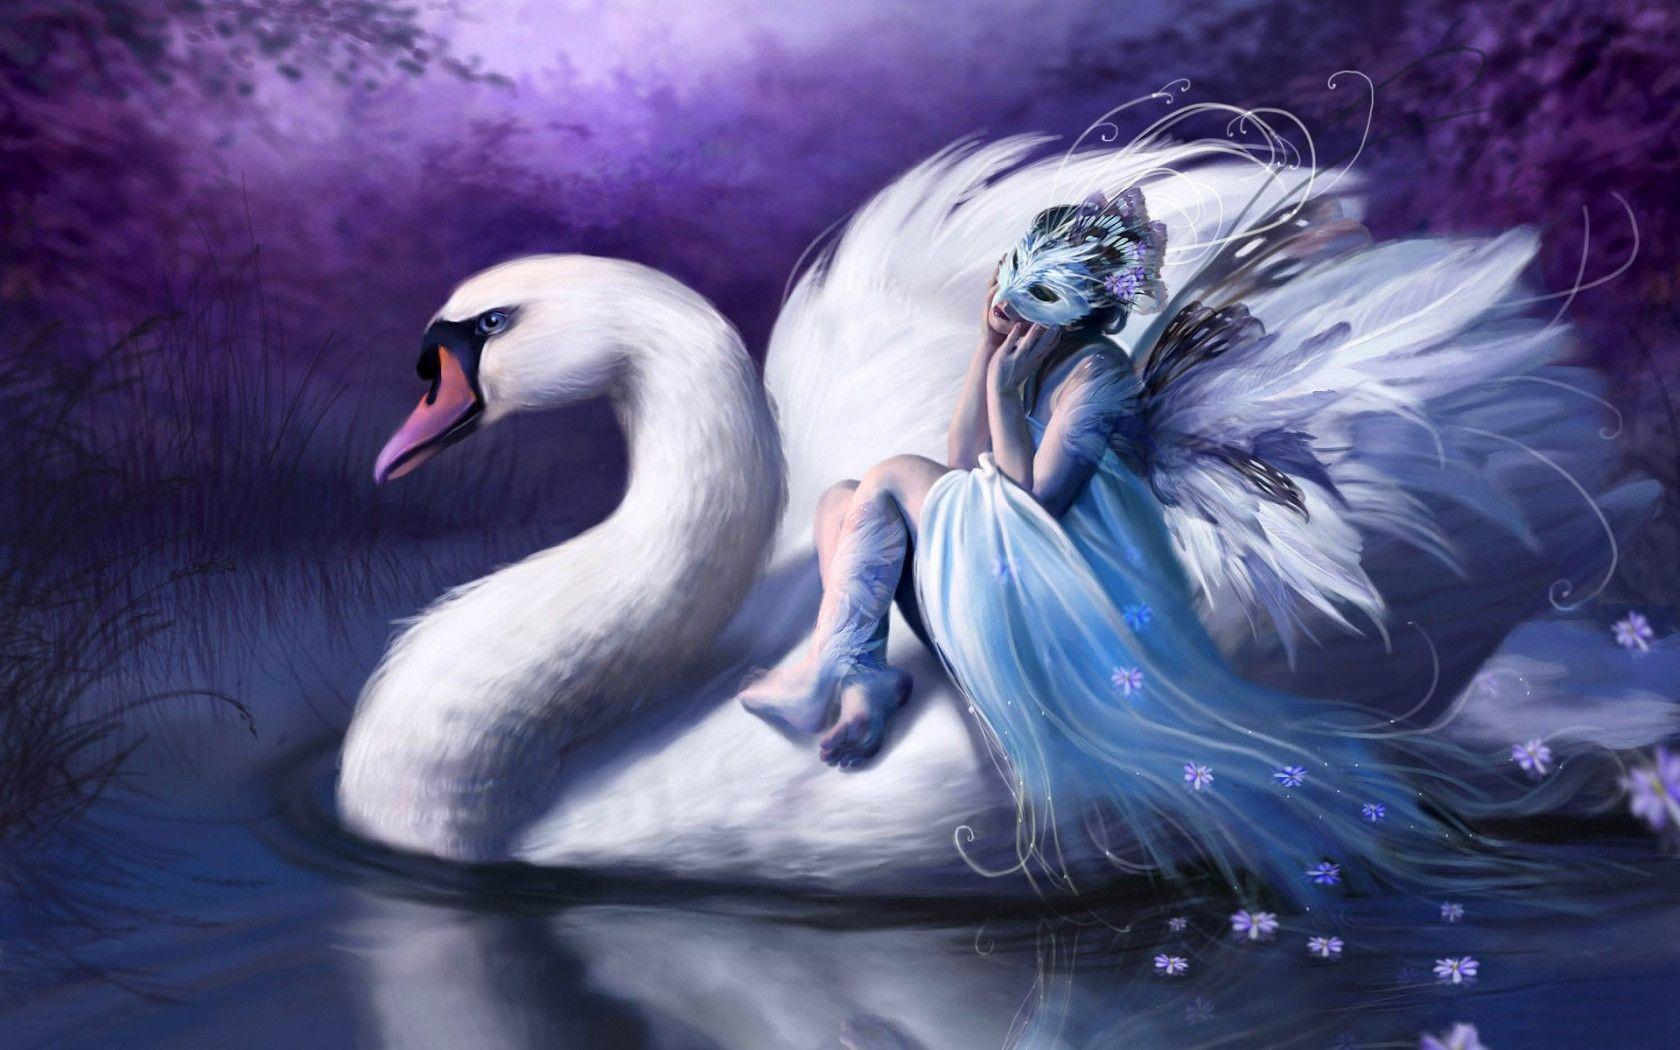 Girl and swan wallpaper